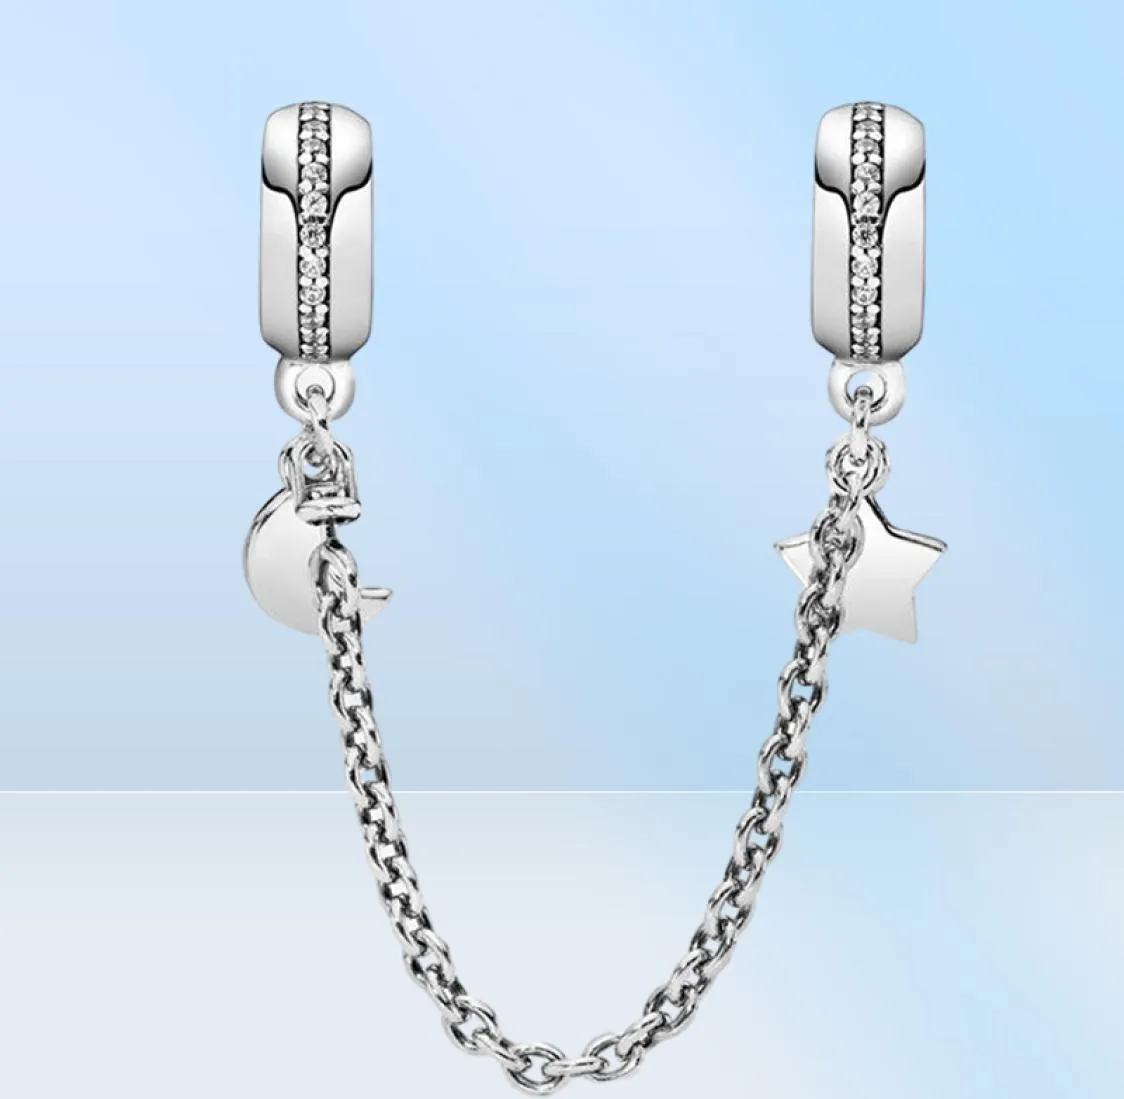 100% 925 Silver Silver Half Moon and Star Safety Chain Charms Fit Original European Charm Bracelet Fashion Women Engagement de mariage Bijoux Accessoires 1046434